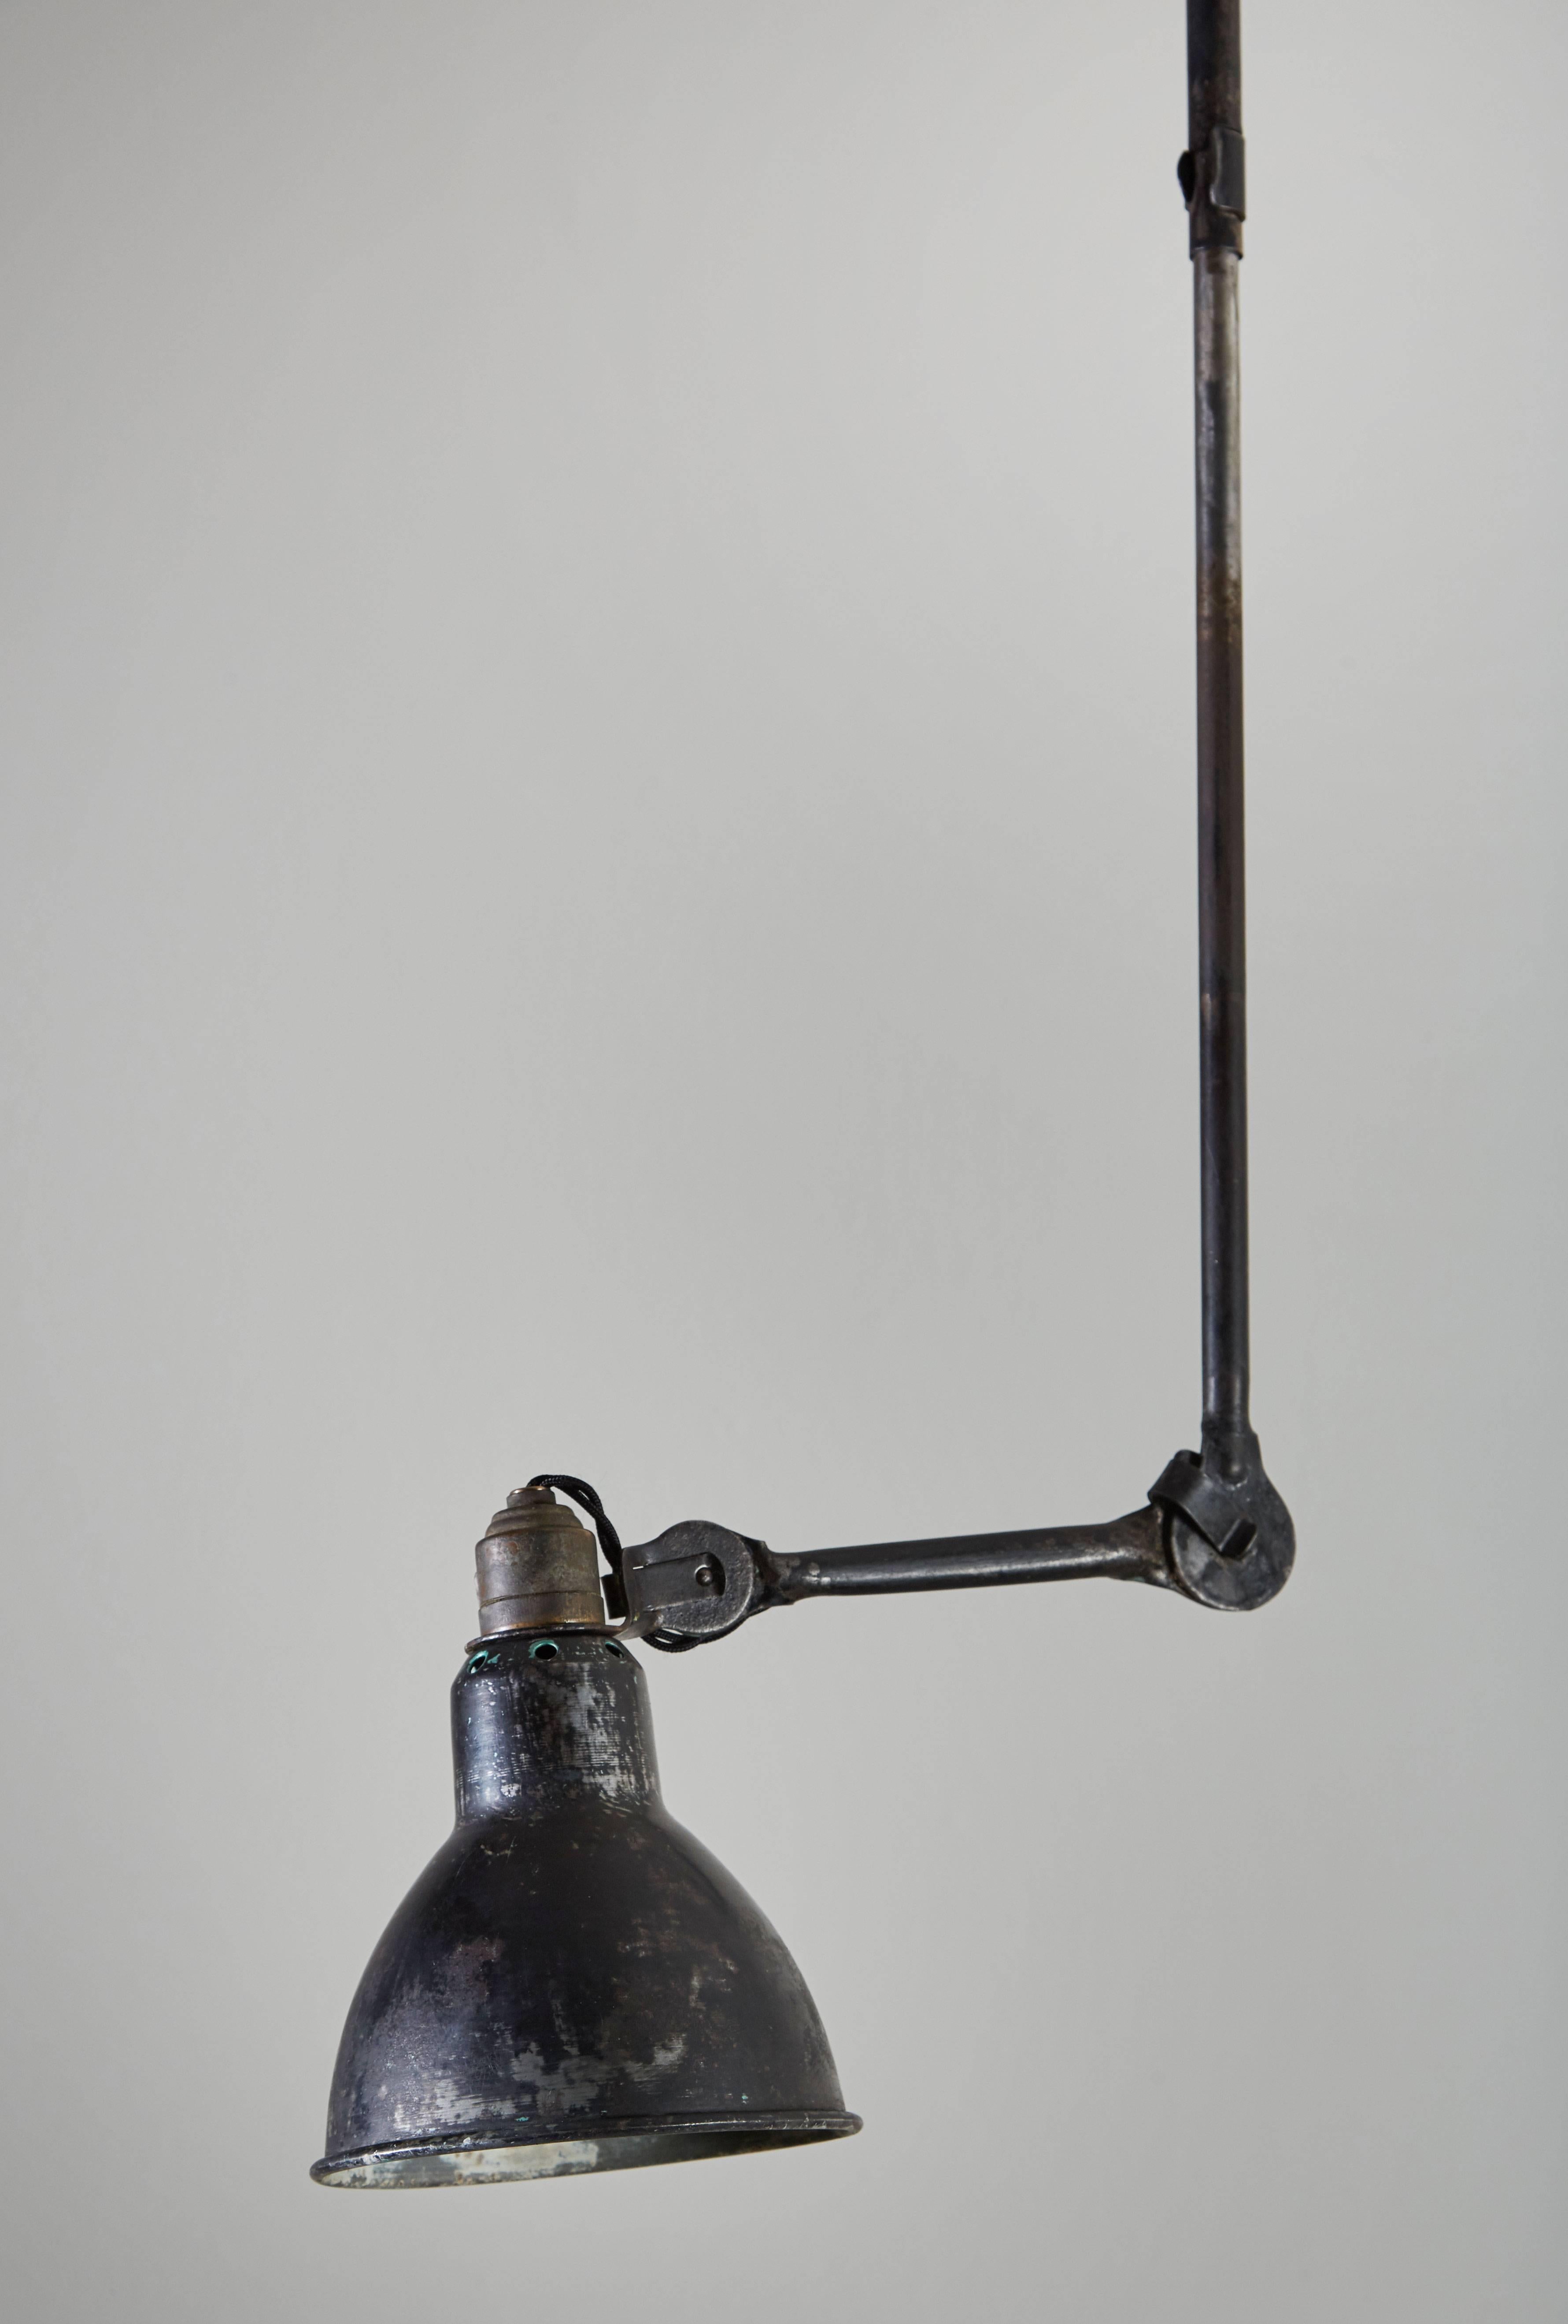 Model No. 302 Adjustable Ceiling Light by Gras Ravel 1